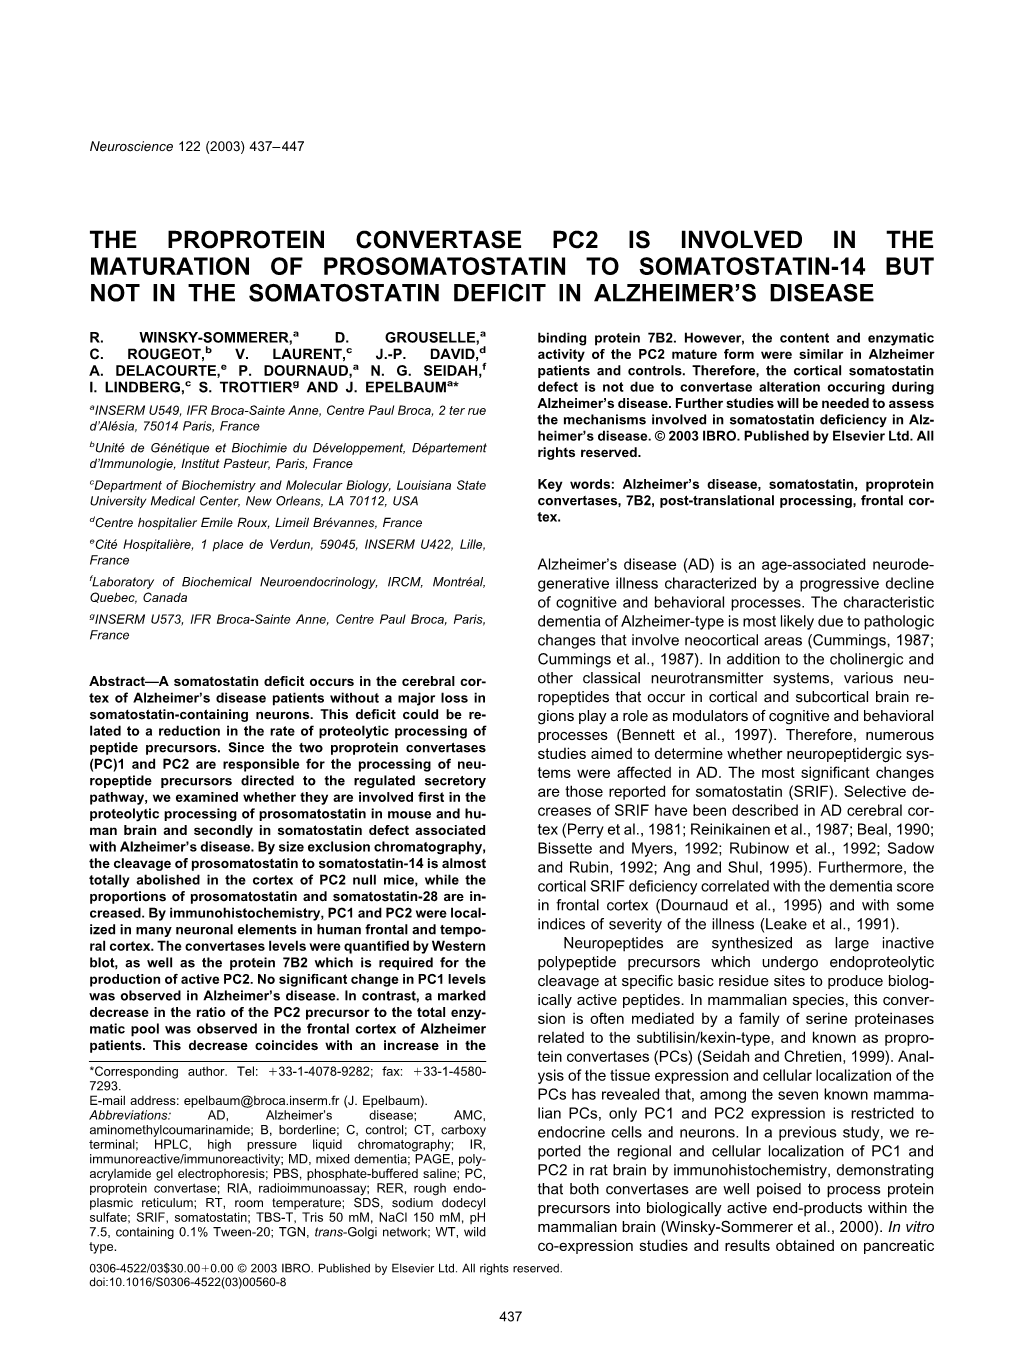 The Proprotein Convertase Pc2 Is Involved in the Maturation of Prosomatostatin to Somatostatin-14 but Not in the Somatostatin Deficit in Alzheimer’S Disease